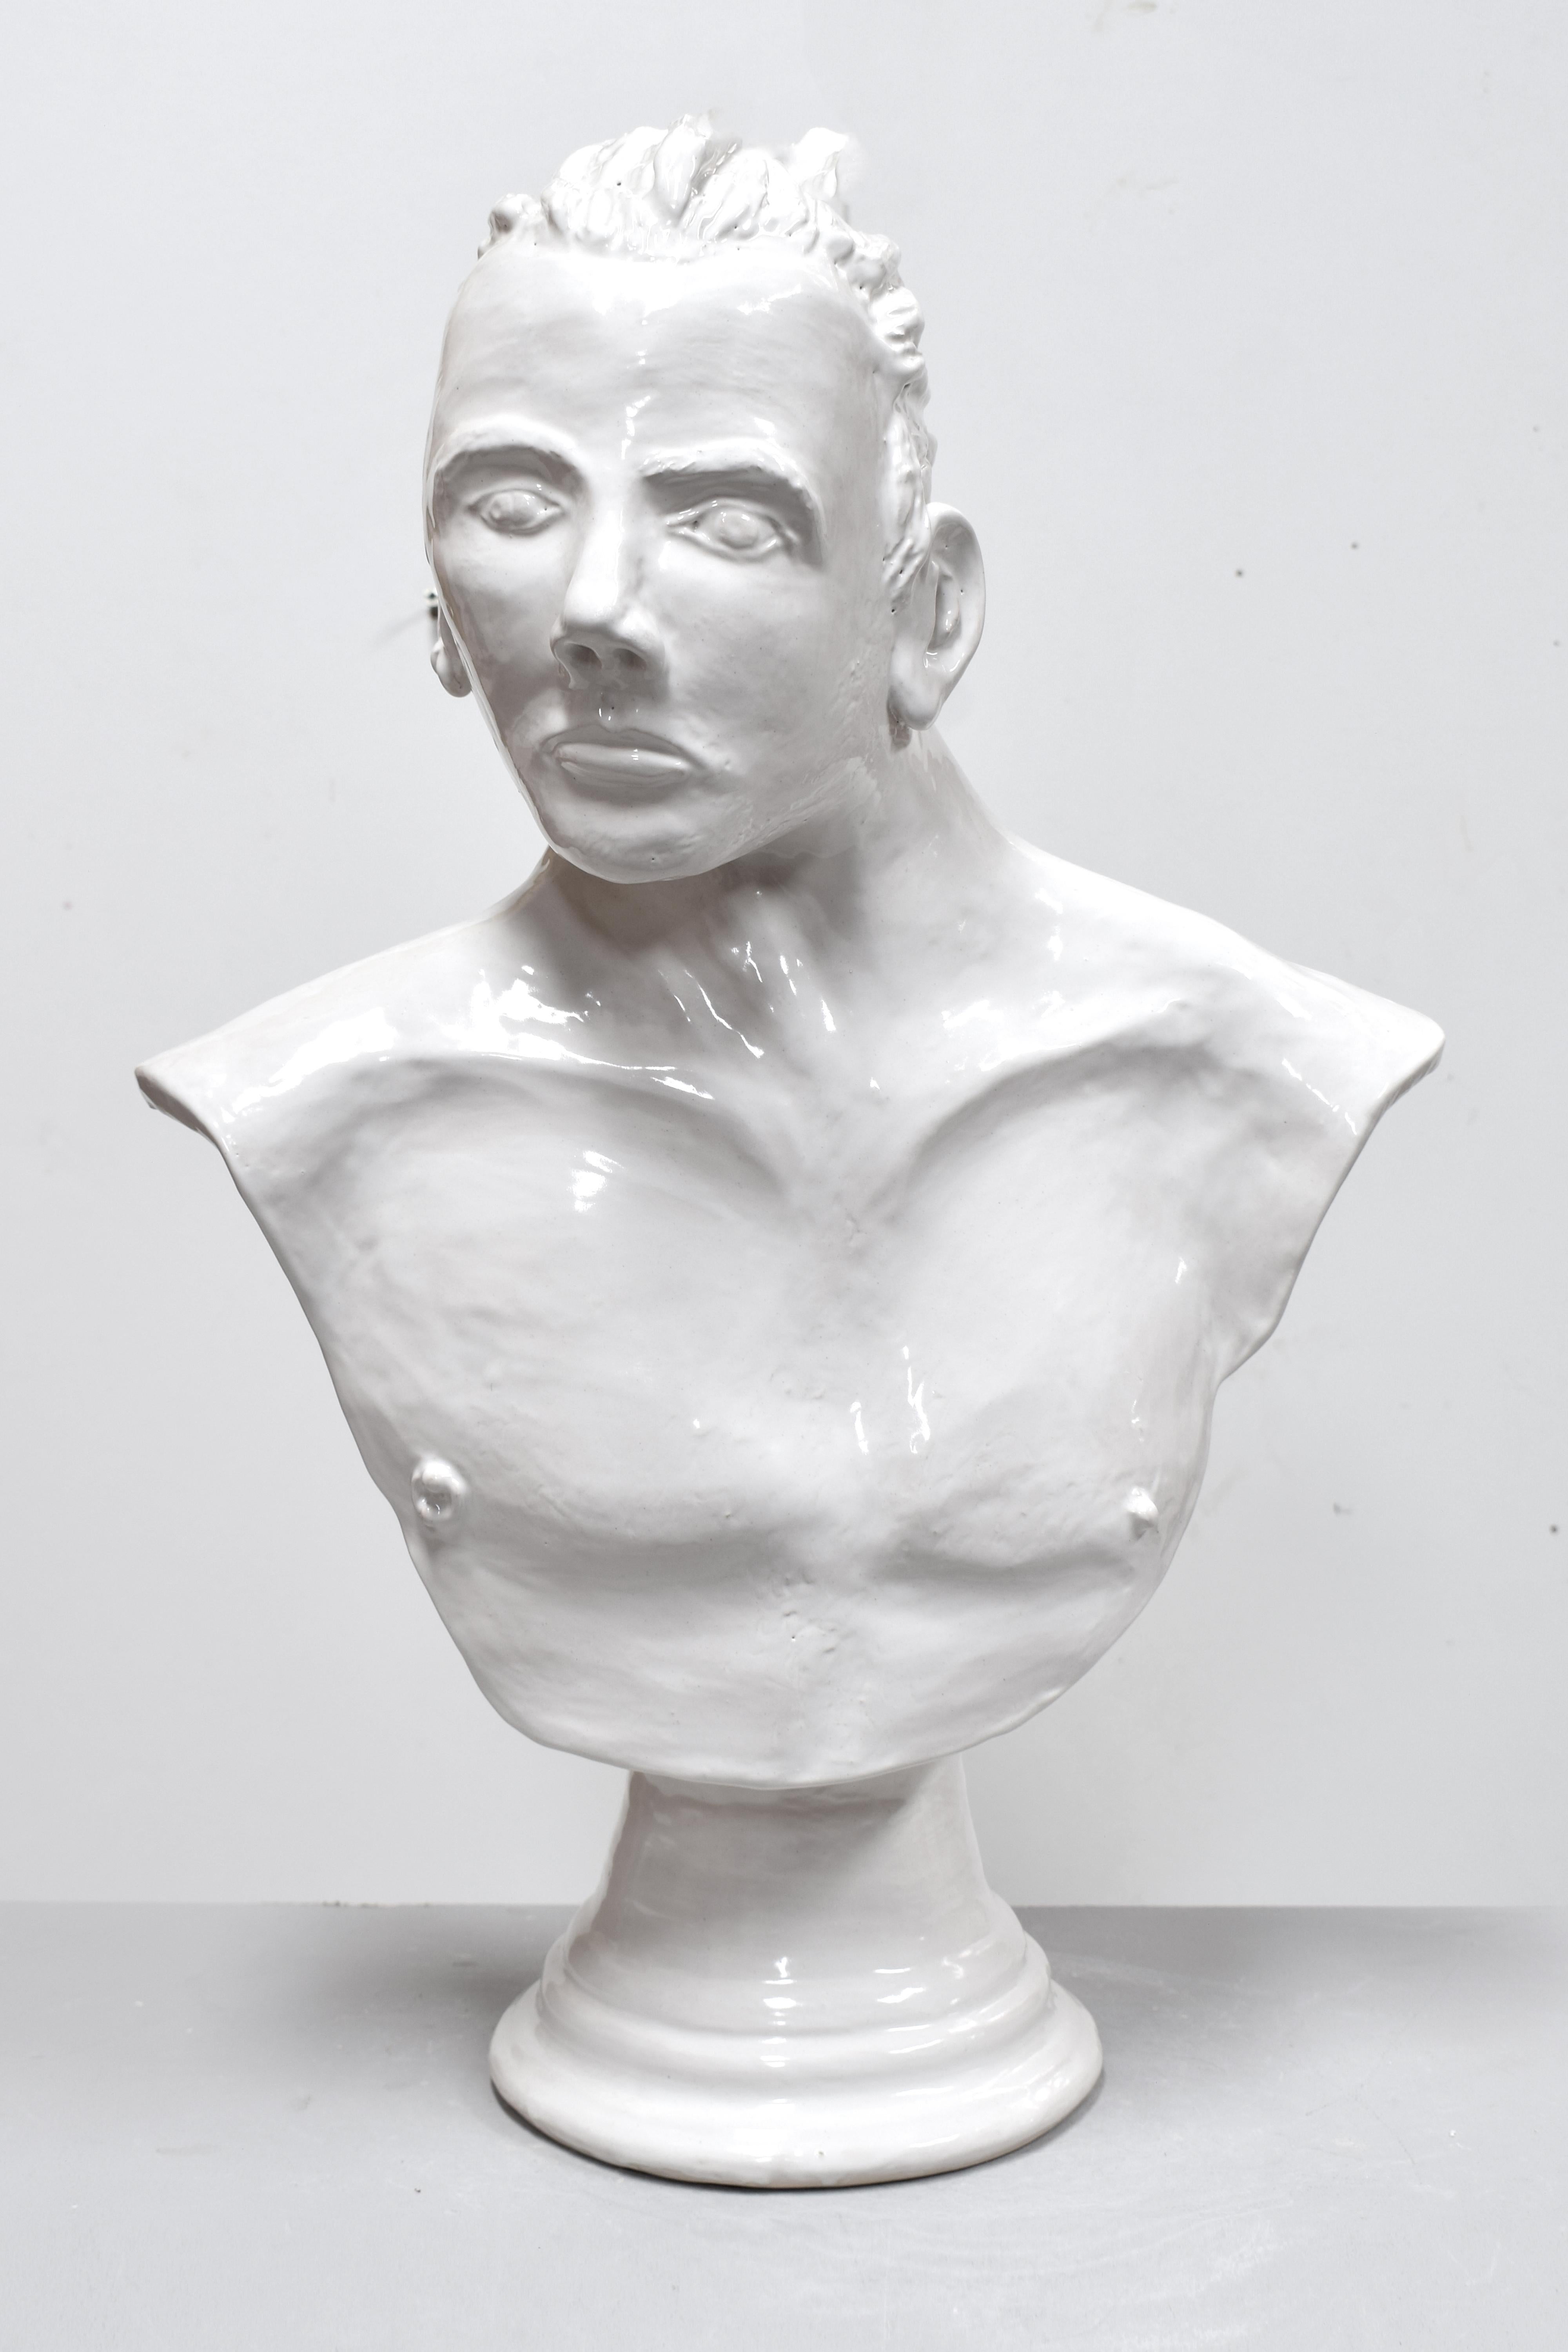 Chris Rijk Figurative Sculpture - Self portrait as straight man